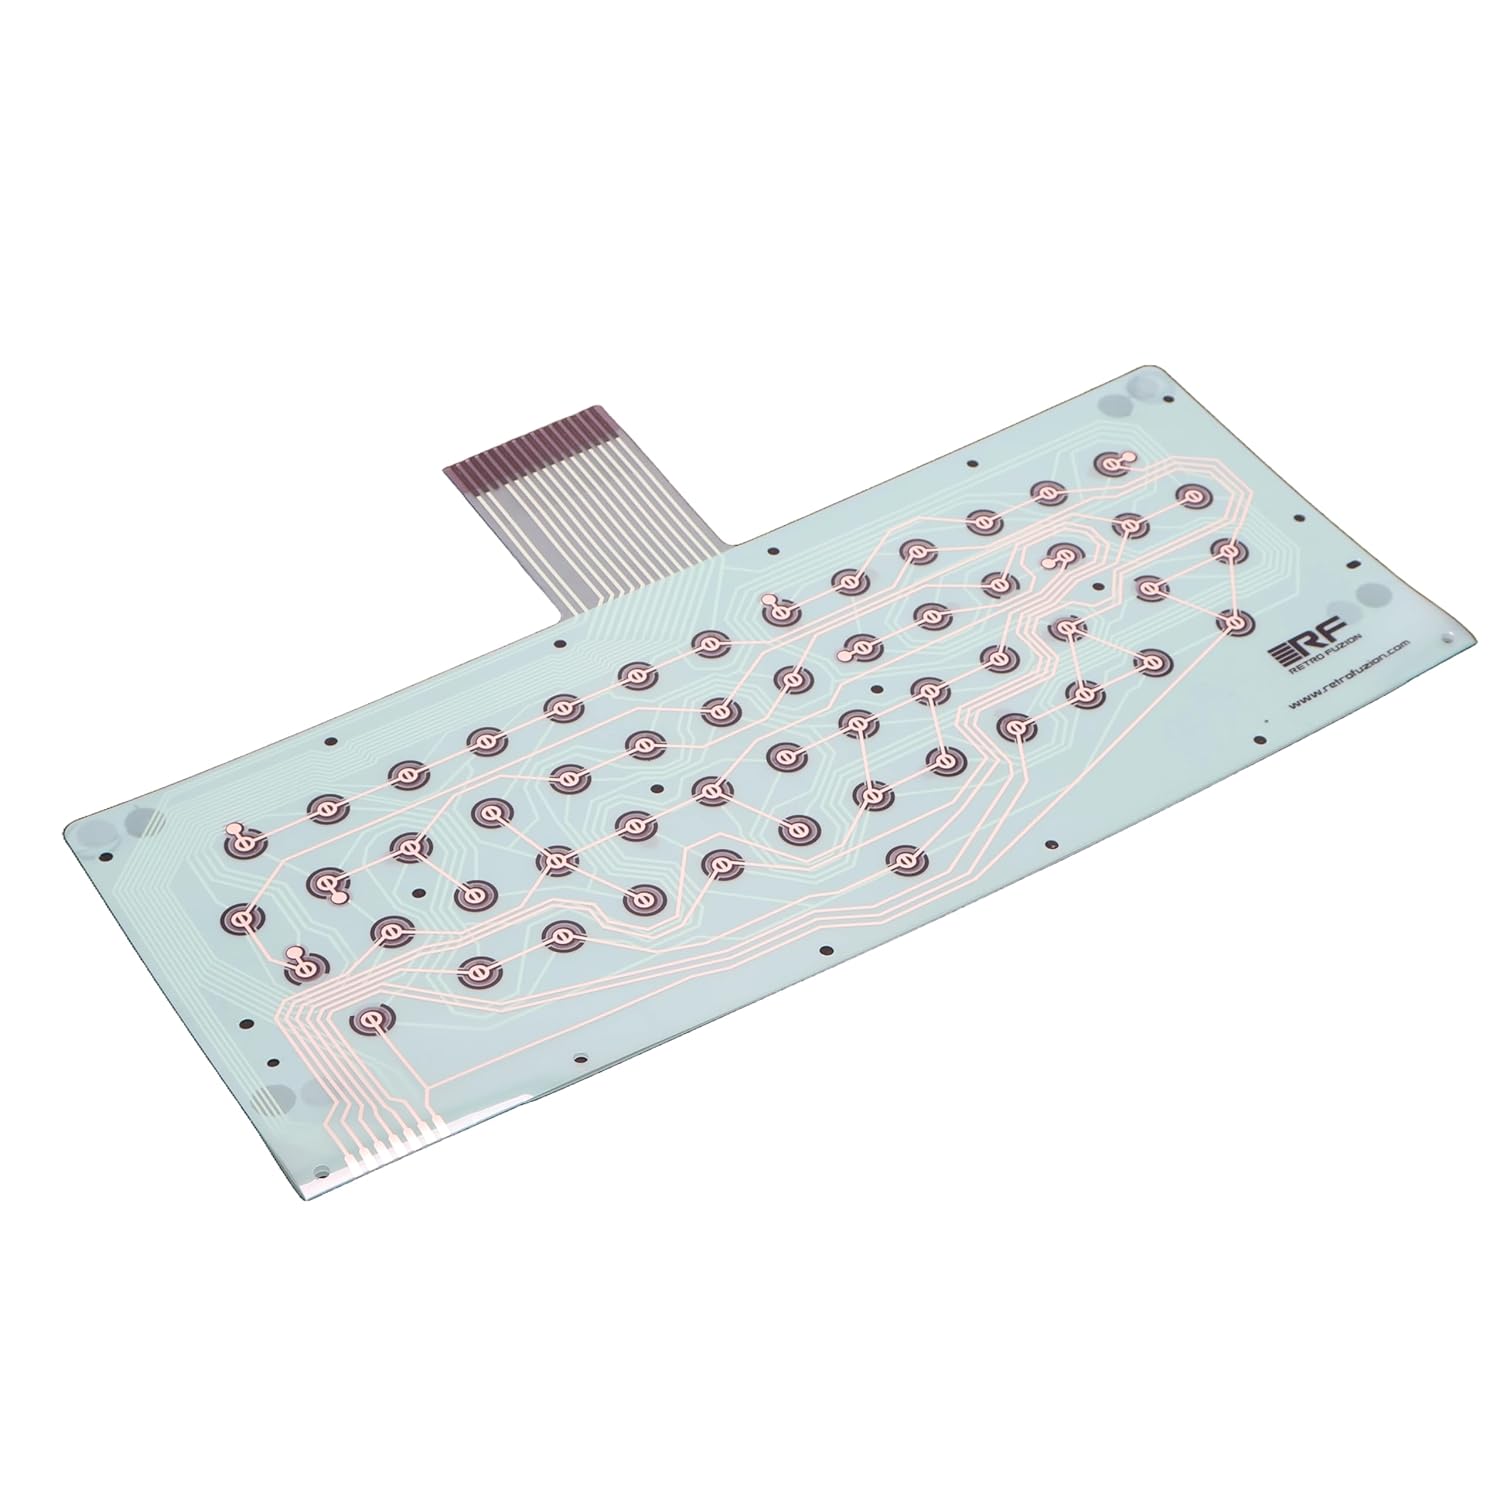 TRS80 CoCo II Keyboard Membrane